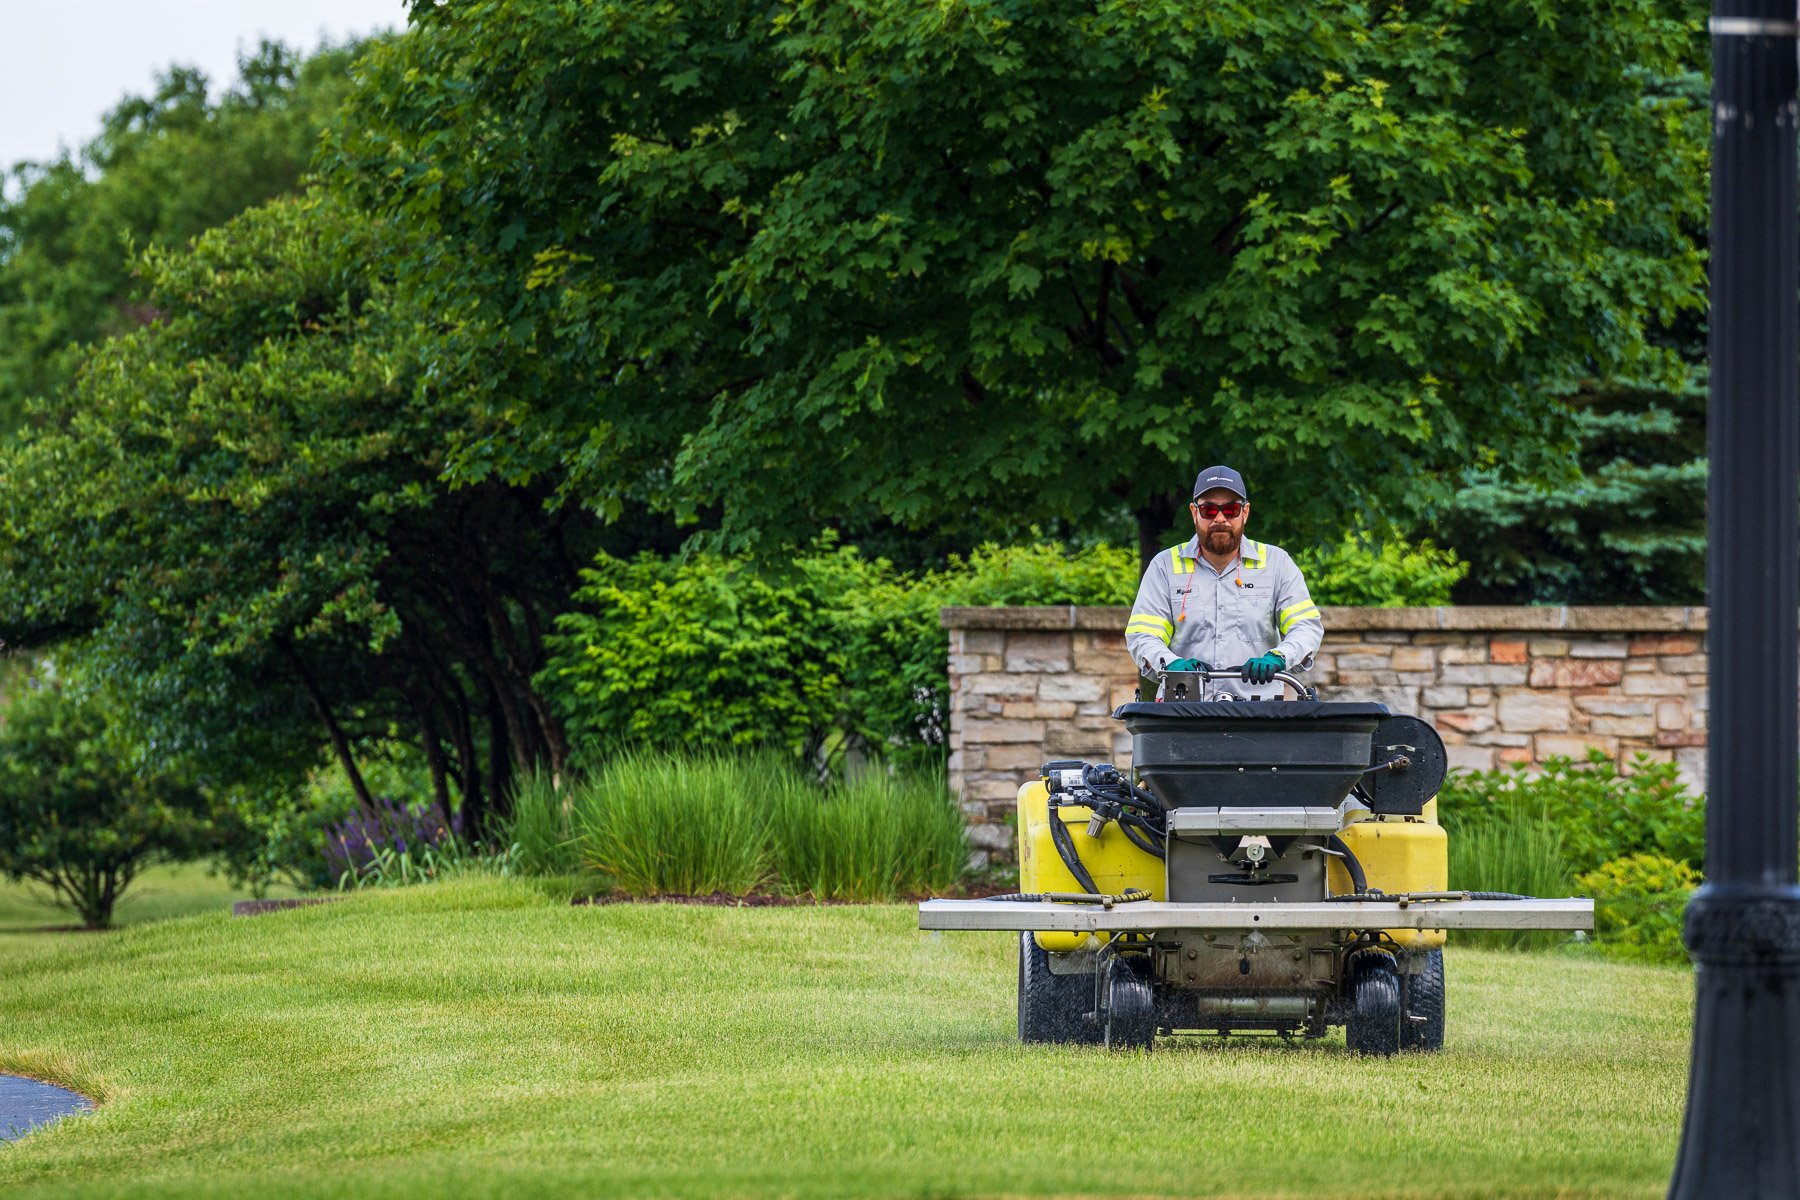 commercial lawn care technician spraying lawn with liquid fertilizer